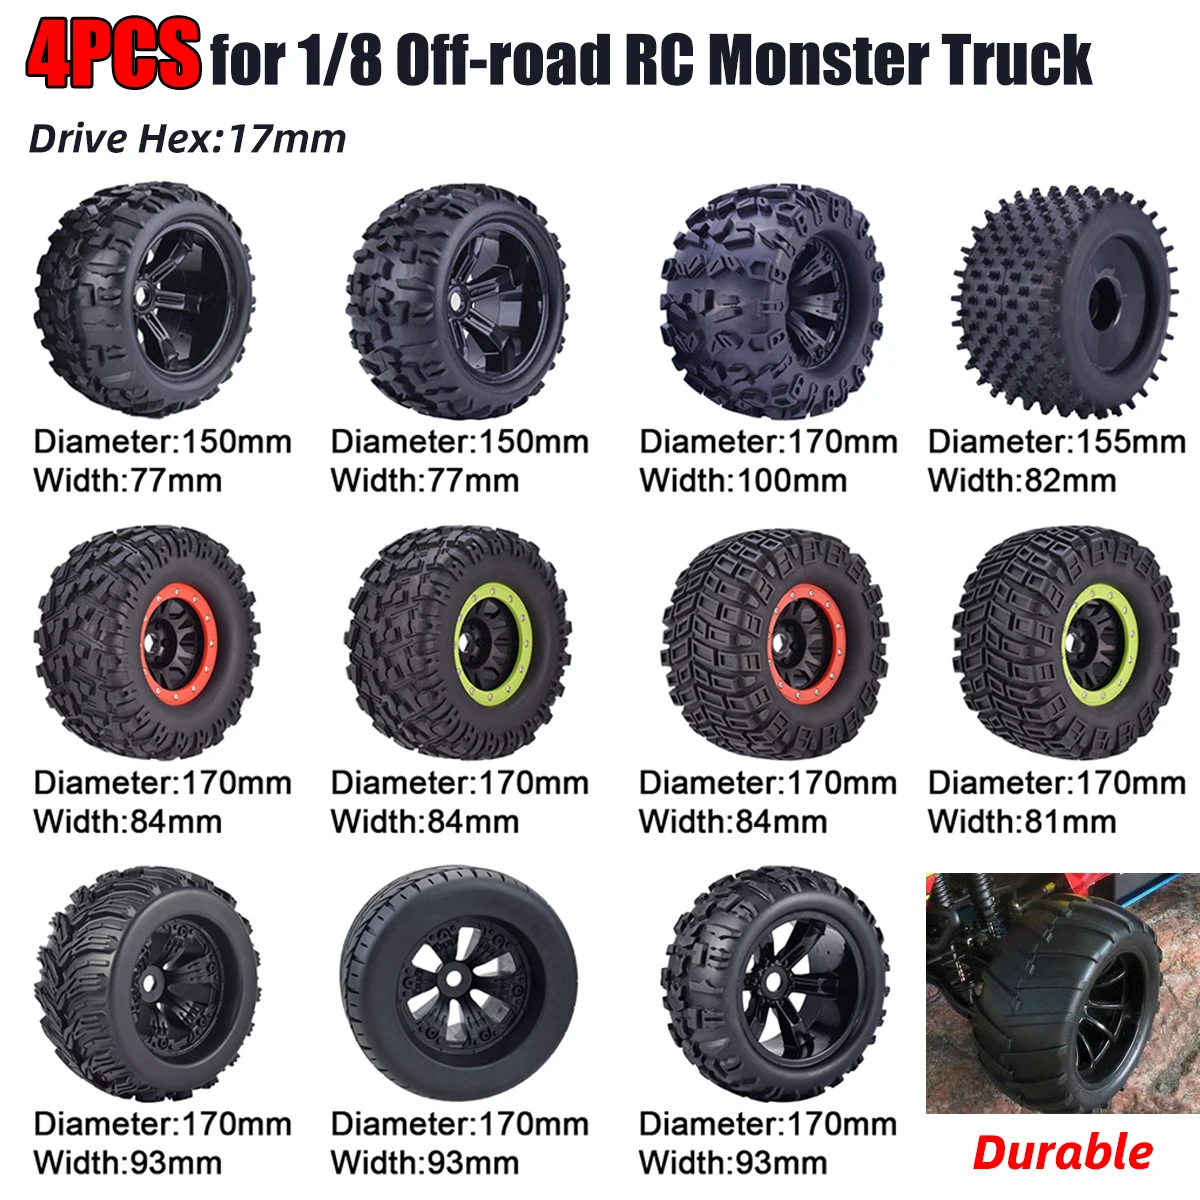 Autorisatie Buitensporig Vervullen 1 8 Rc Monster Truck Wheels Tires 17mm | Wheel Tyre Rc Car Hex 17mm - 2pcs  4pcs 170mm - Aliexpress